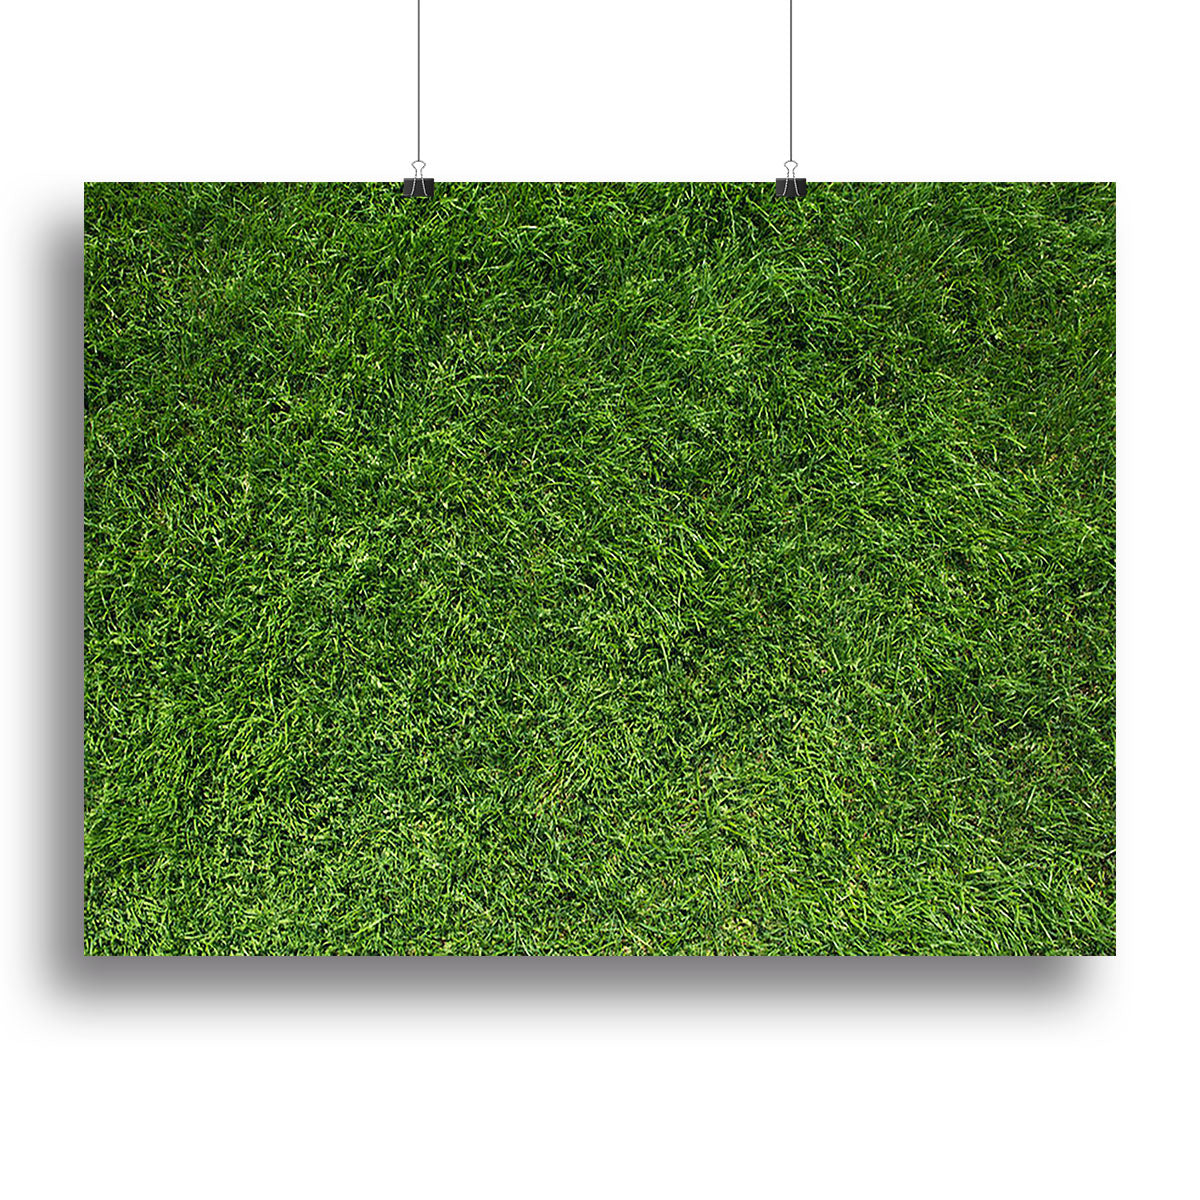 Texture of green grass Canvas Print or Poster - Canvas Art Rocks - 2